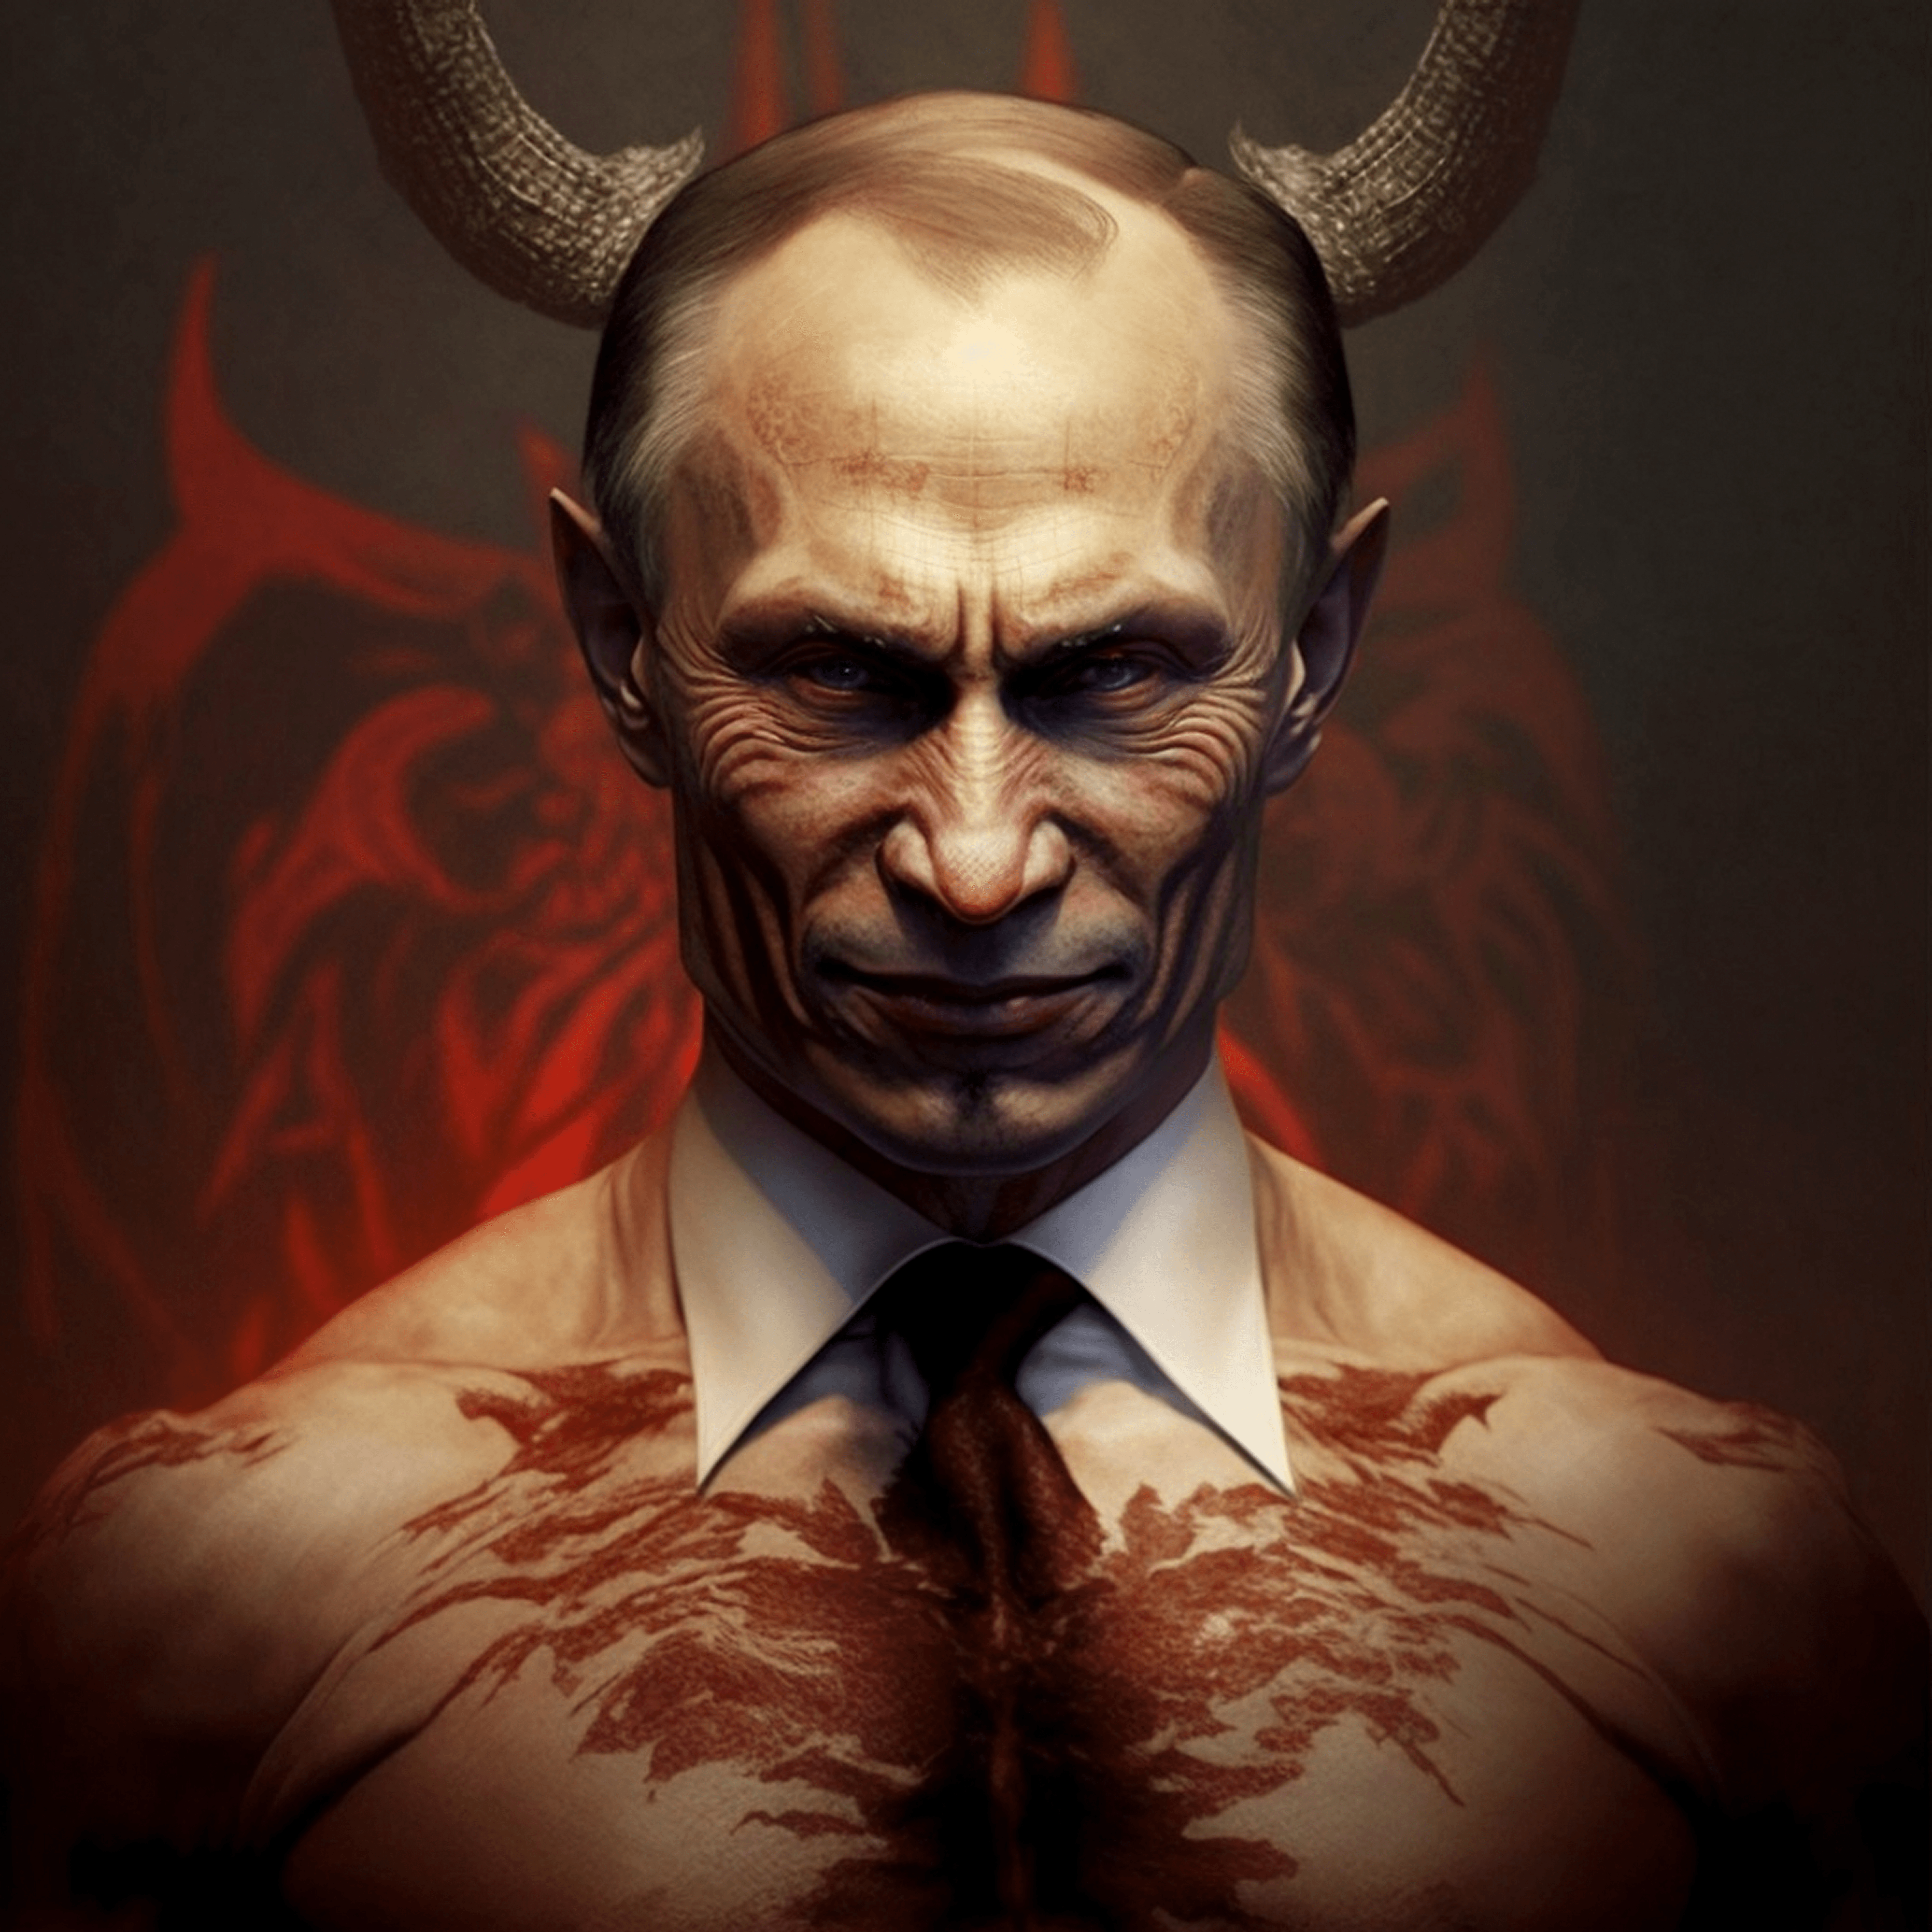  1/1 Putin as Satan Meme by Sollog